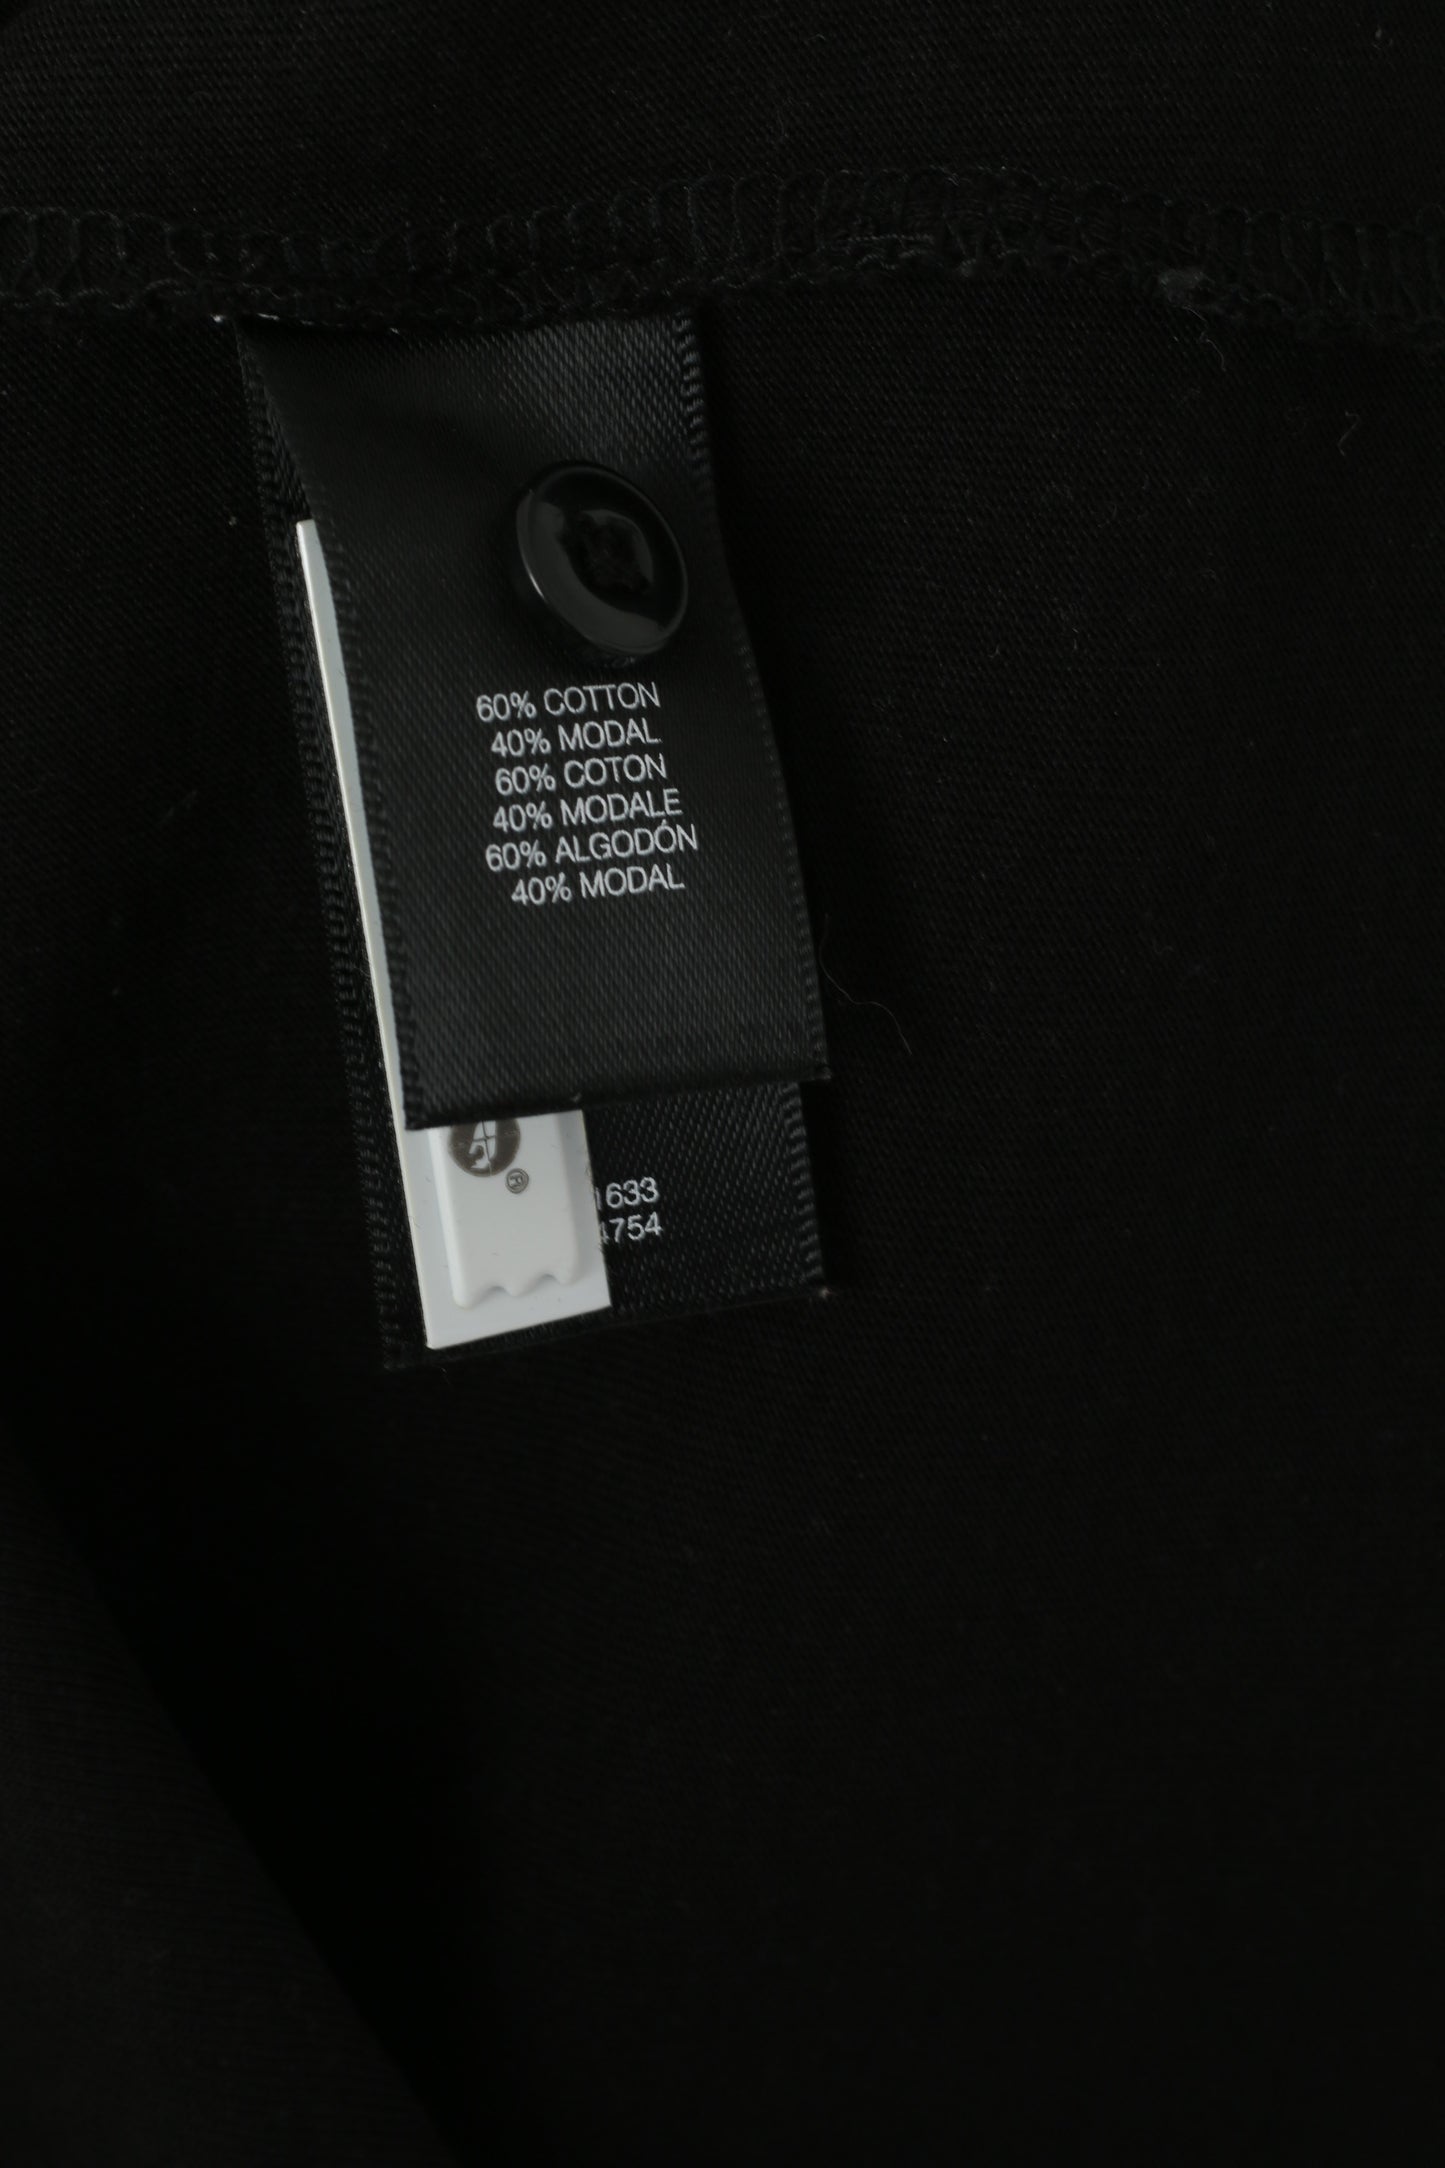 Kenneth Cole New York Men M Casual Shirt Black Cotton Modal Buttoned Plain Top